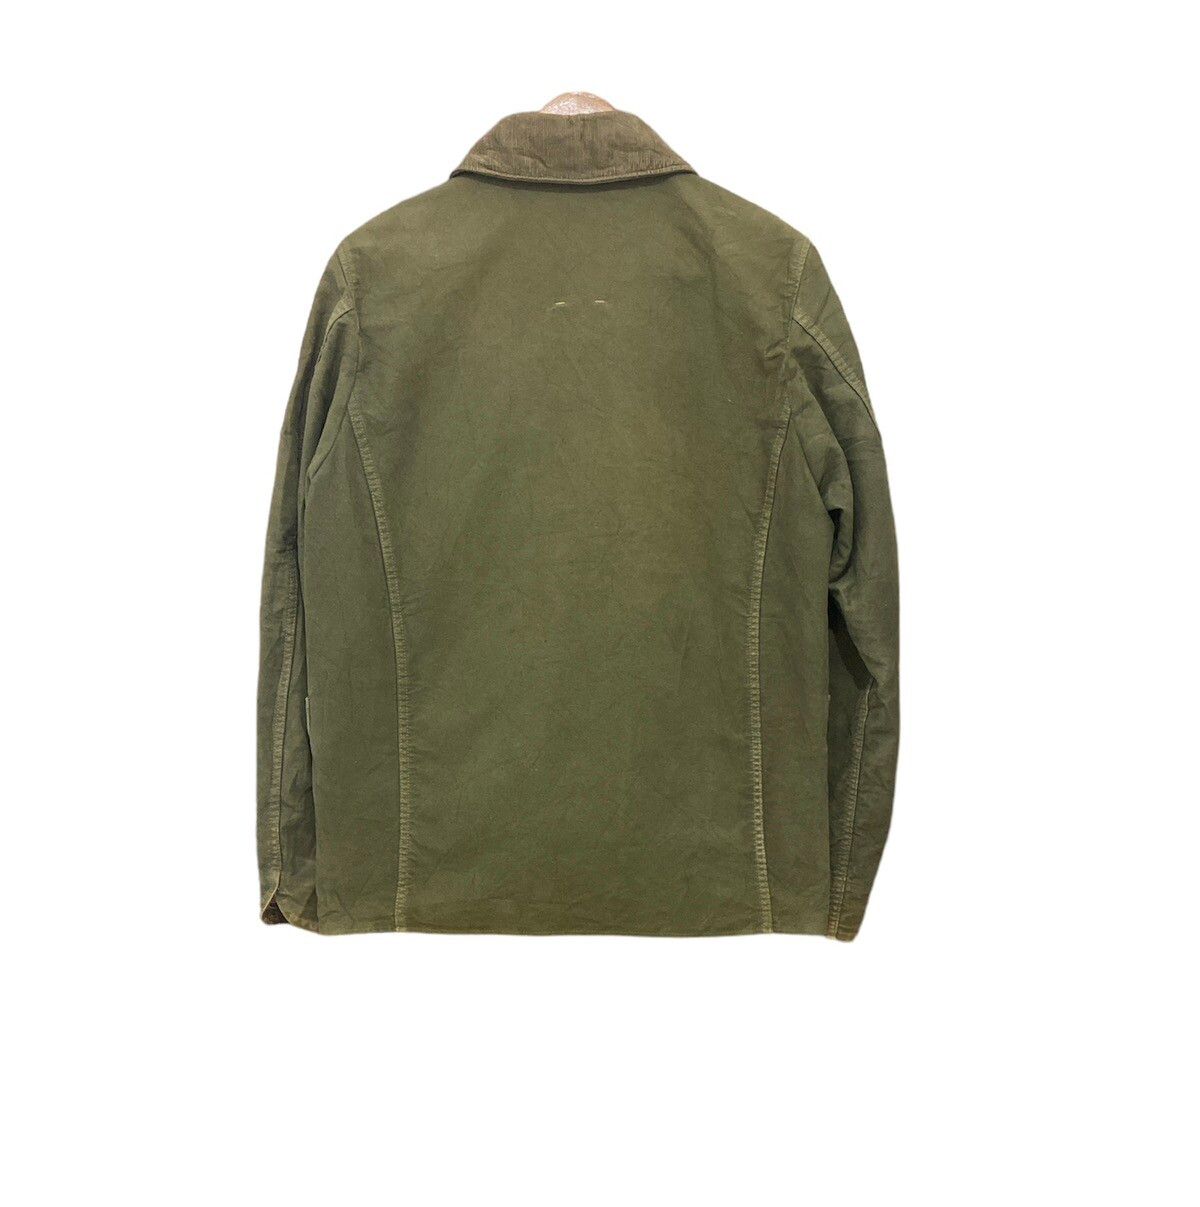 Kapital Military Rare Design Fashion Jacket - 2